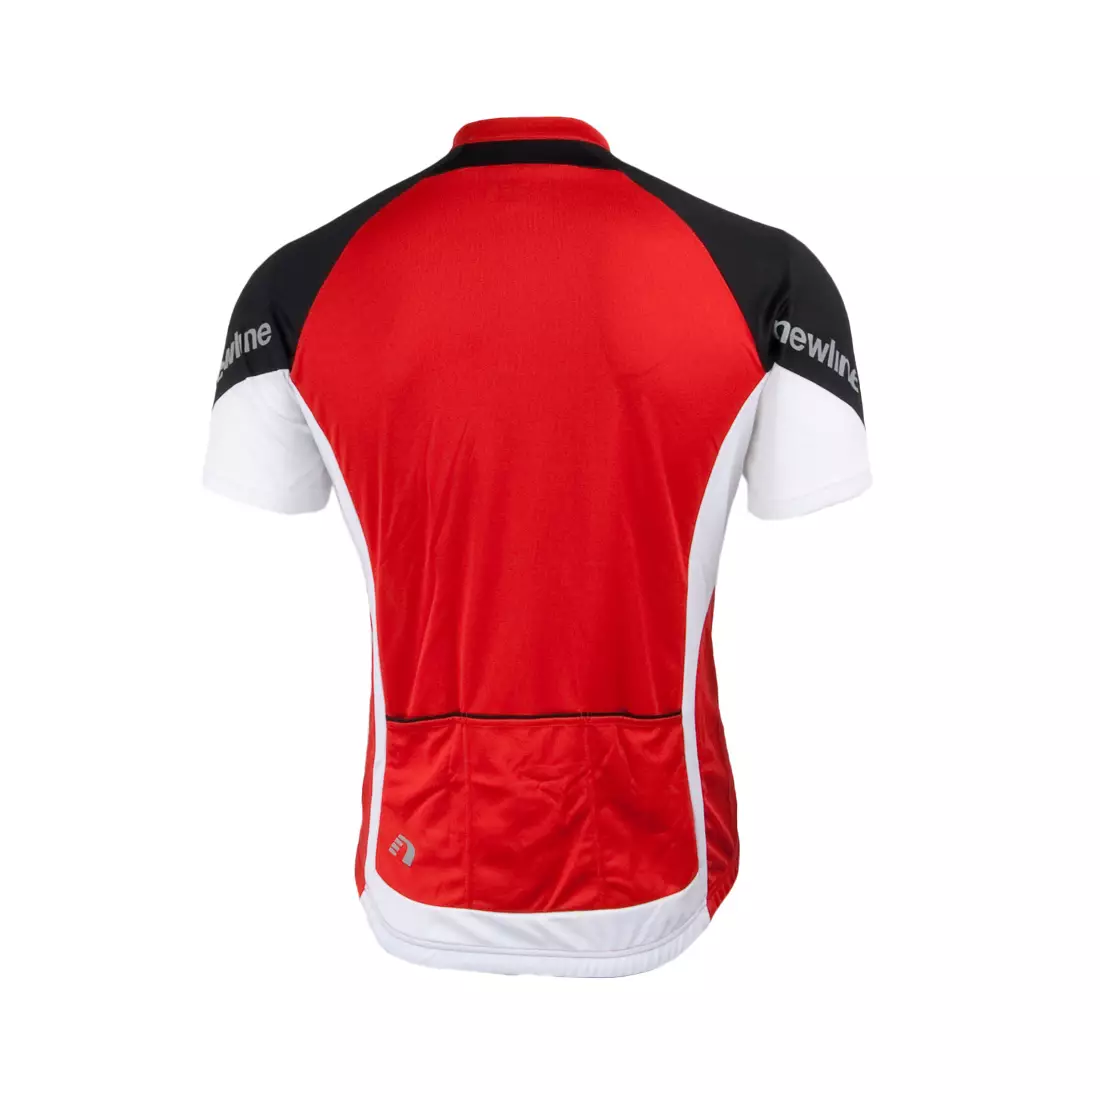 NEWLINE BIKE JERSEY - men's cycling jersey 21517-04